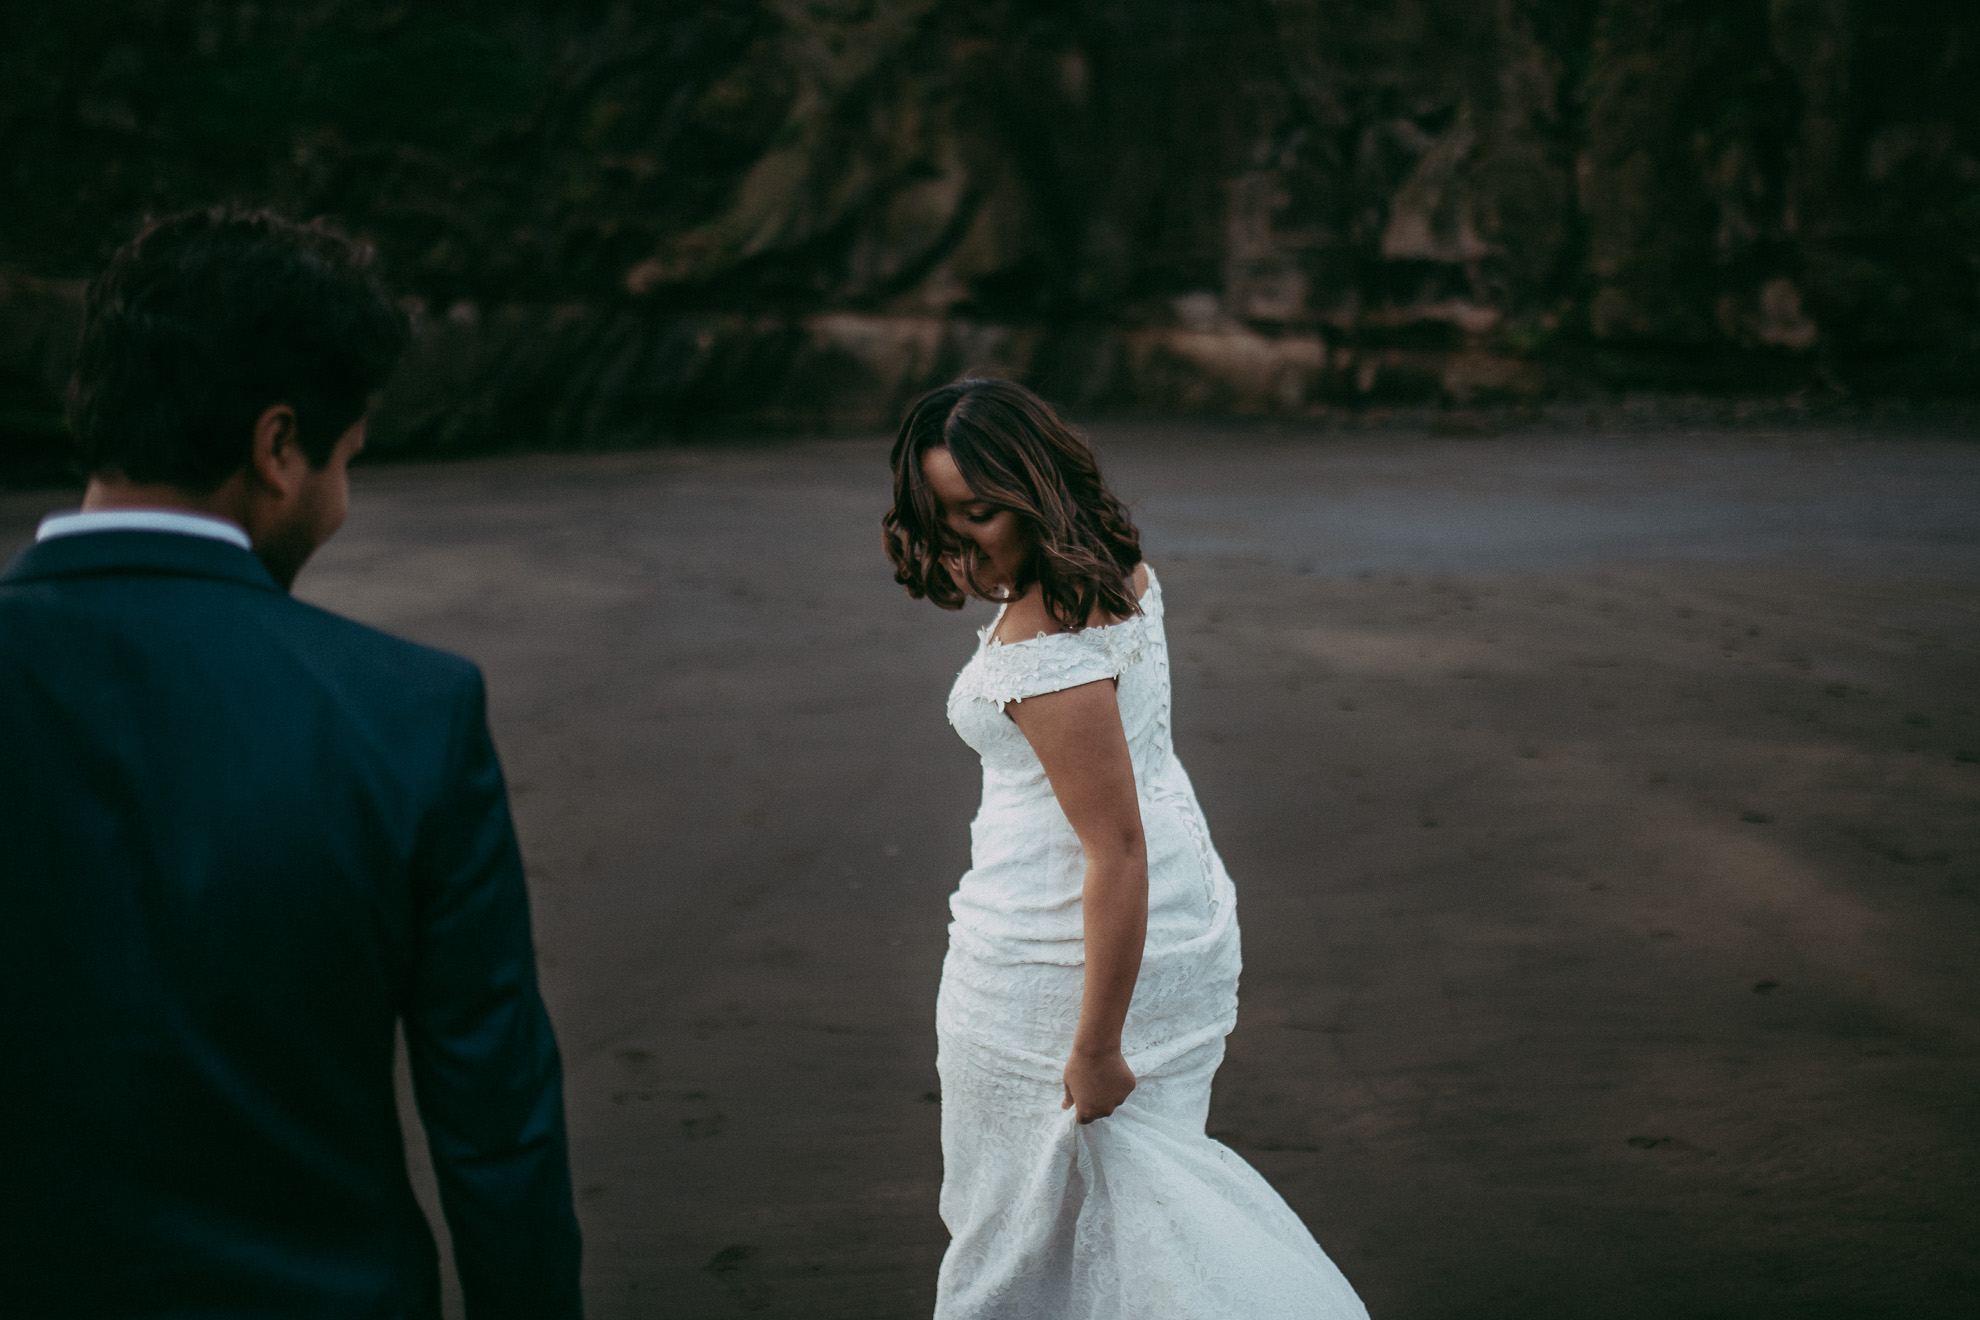 Muriwai Beach {Auckland} post-wedding photo shoot {New Zealand wedding photographer}